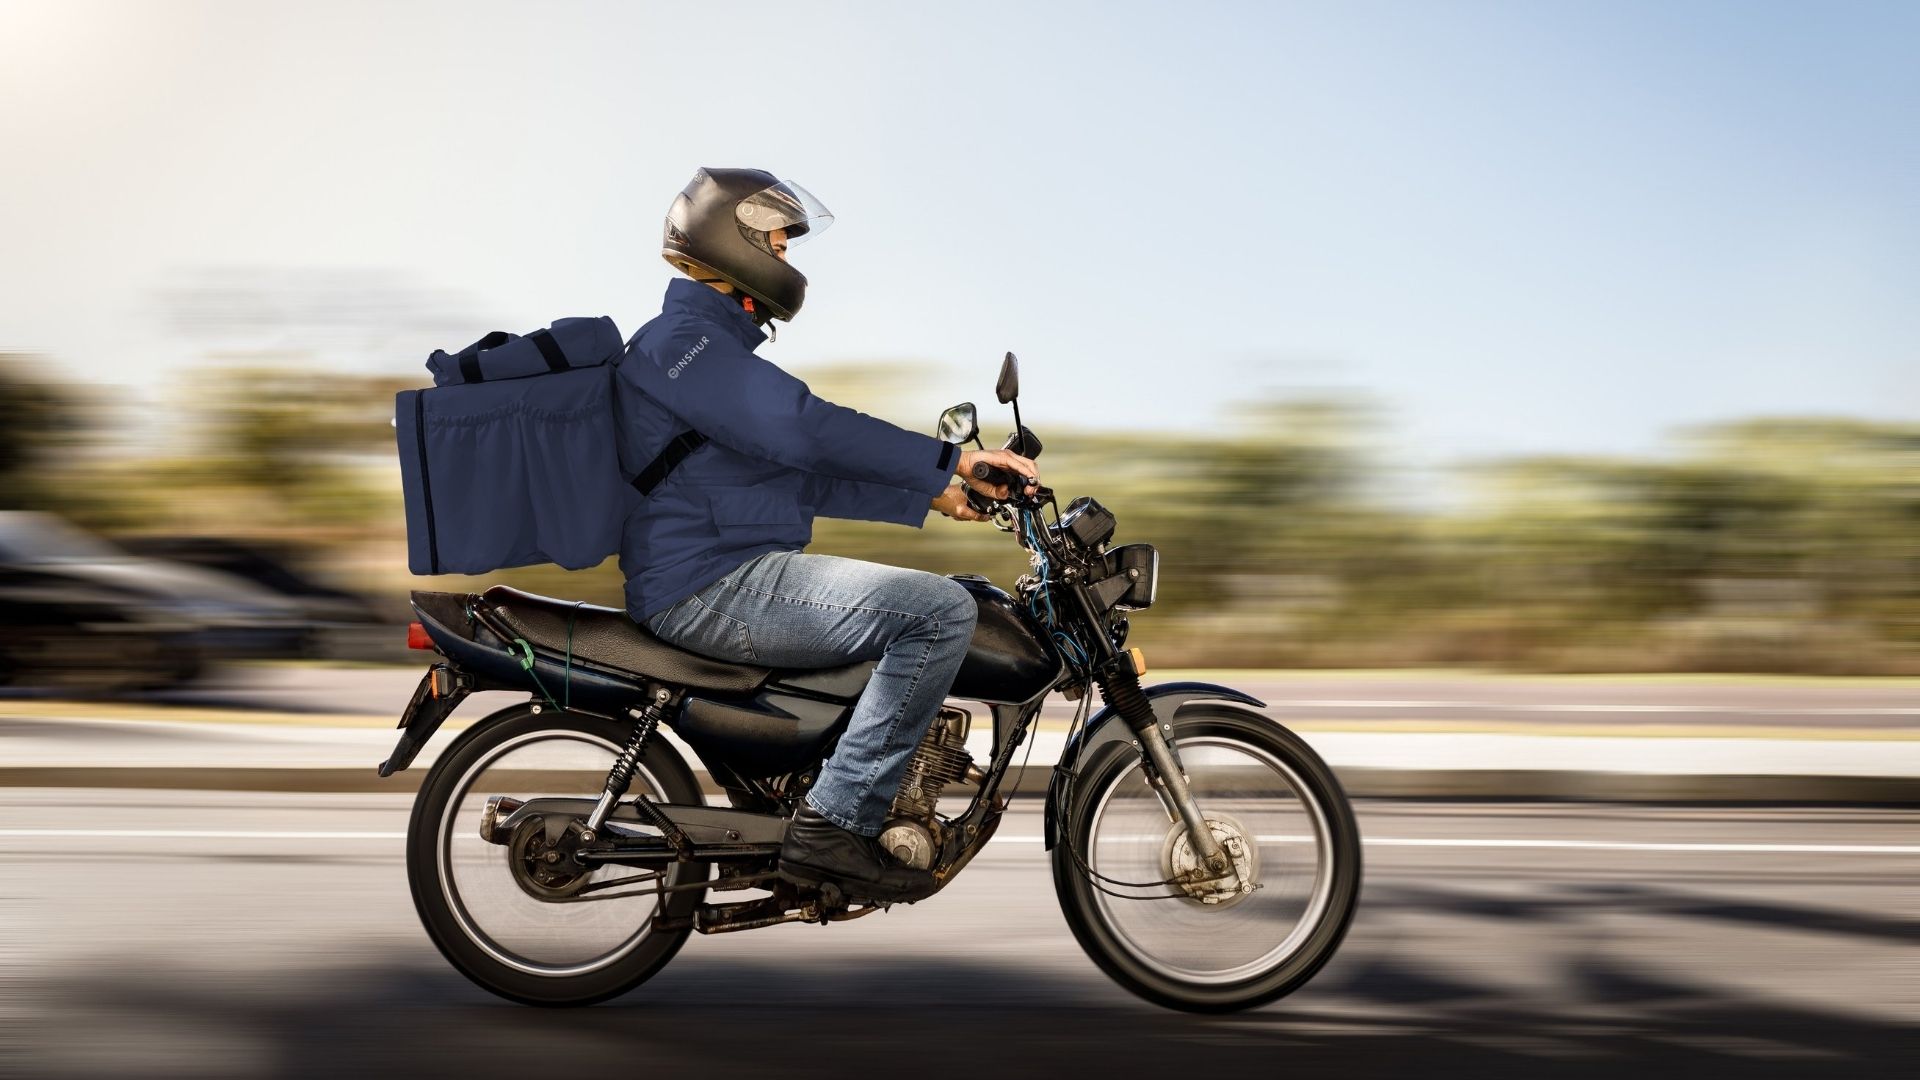 INSHUR motorbike insurance